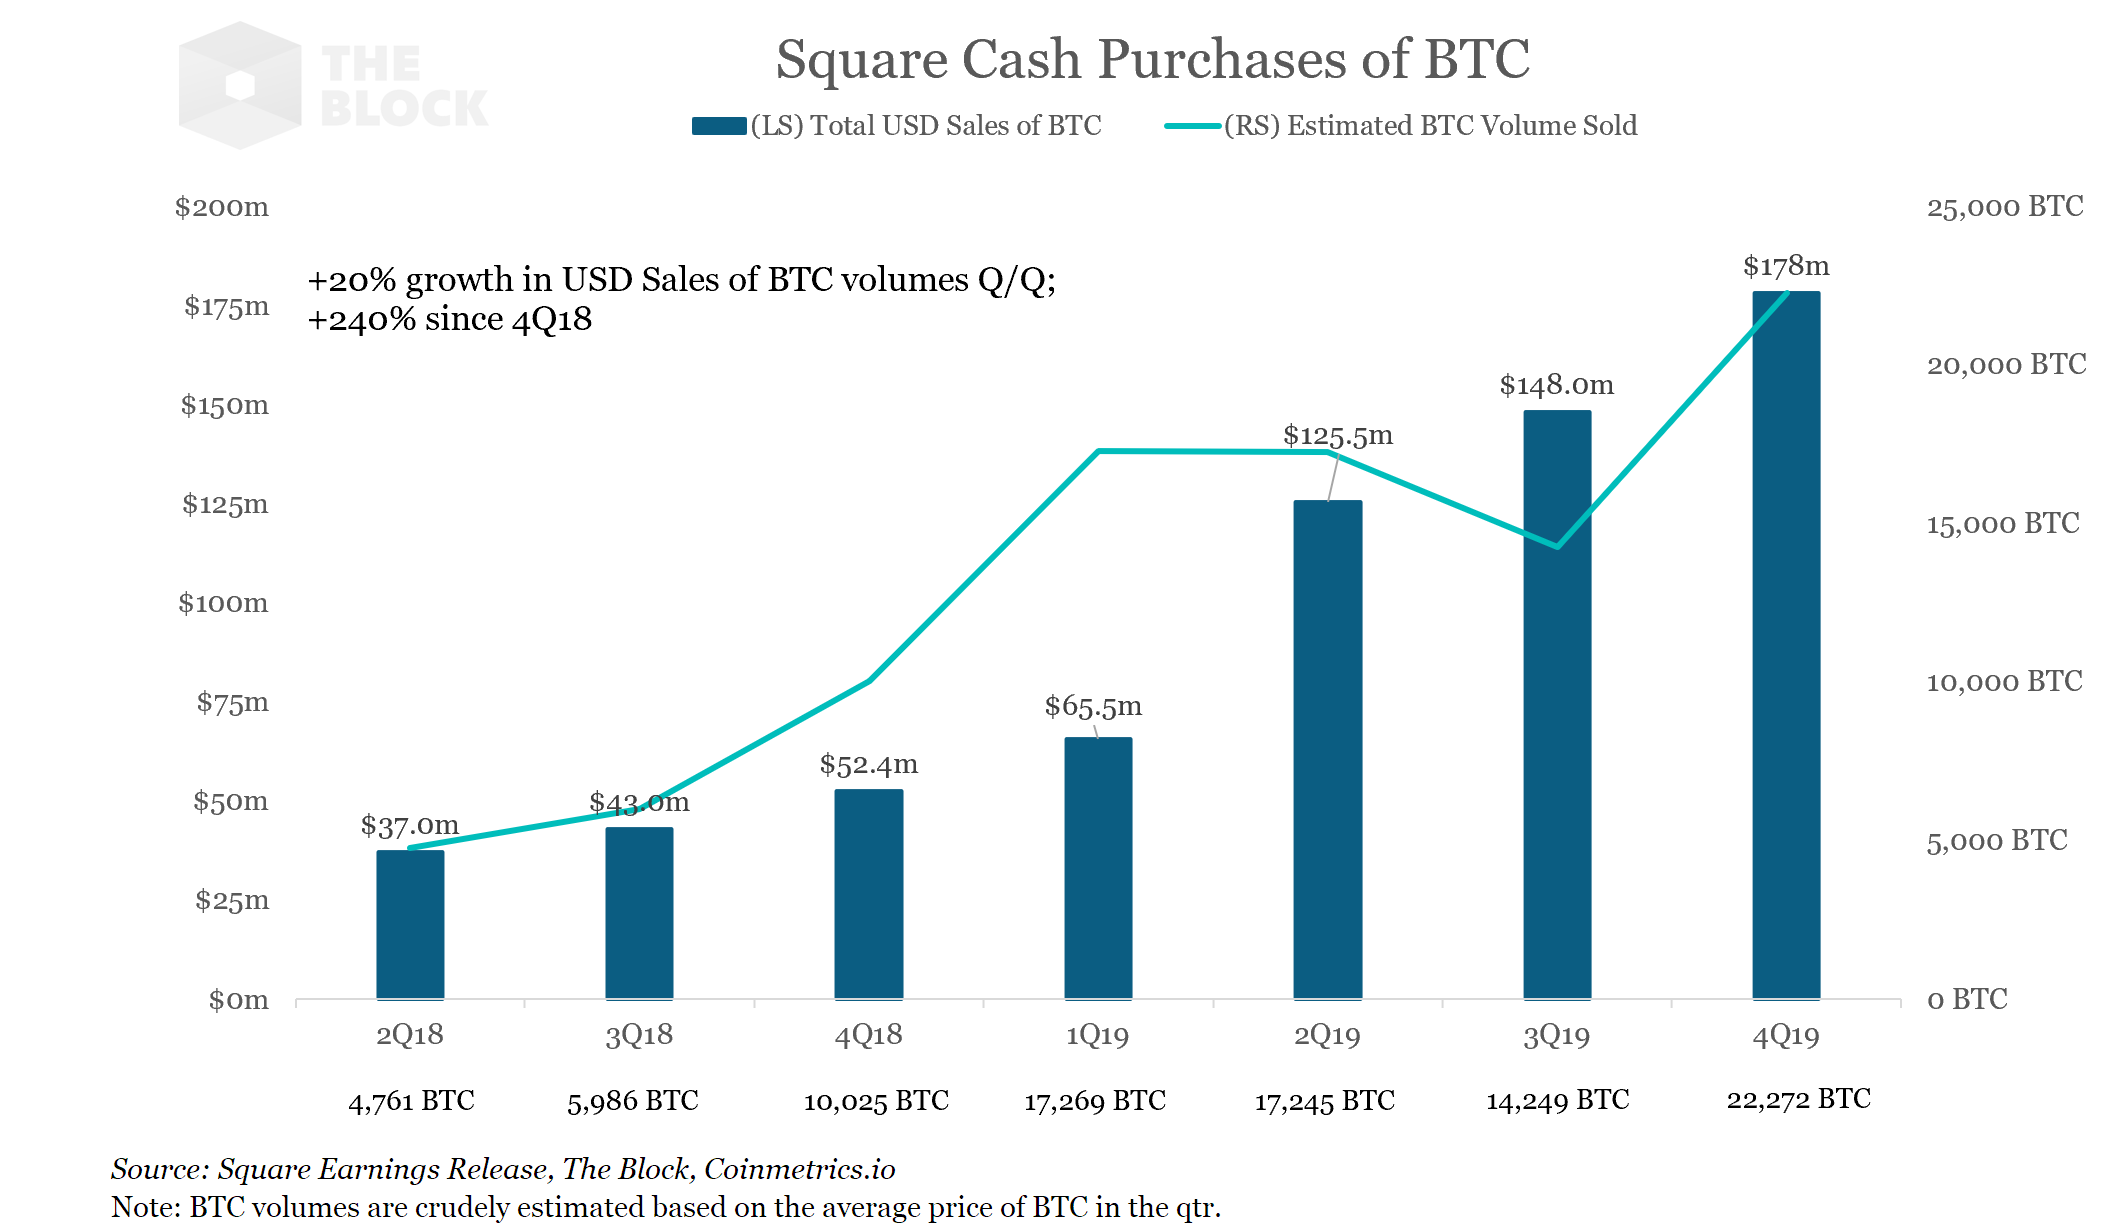 Square отчиталась о продаже биткоинов на $500 млн в 2019 году